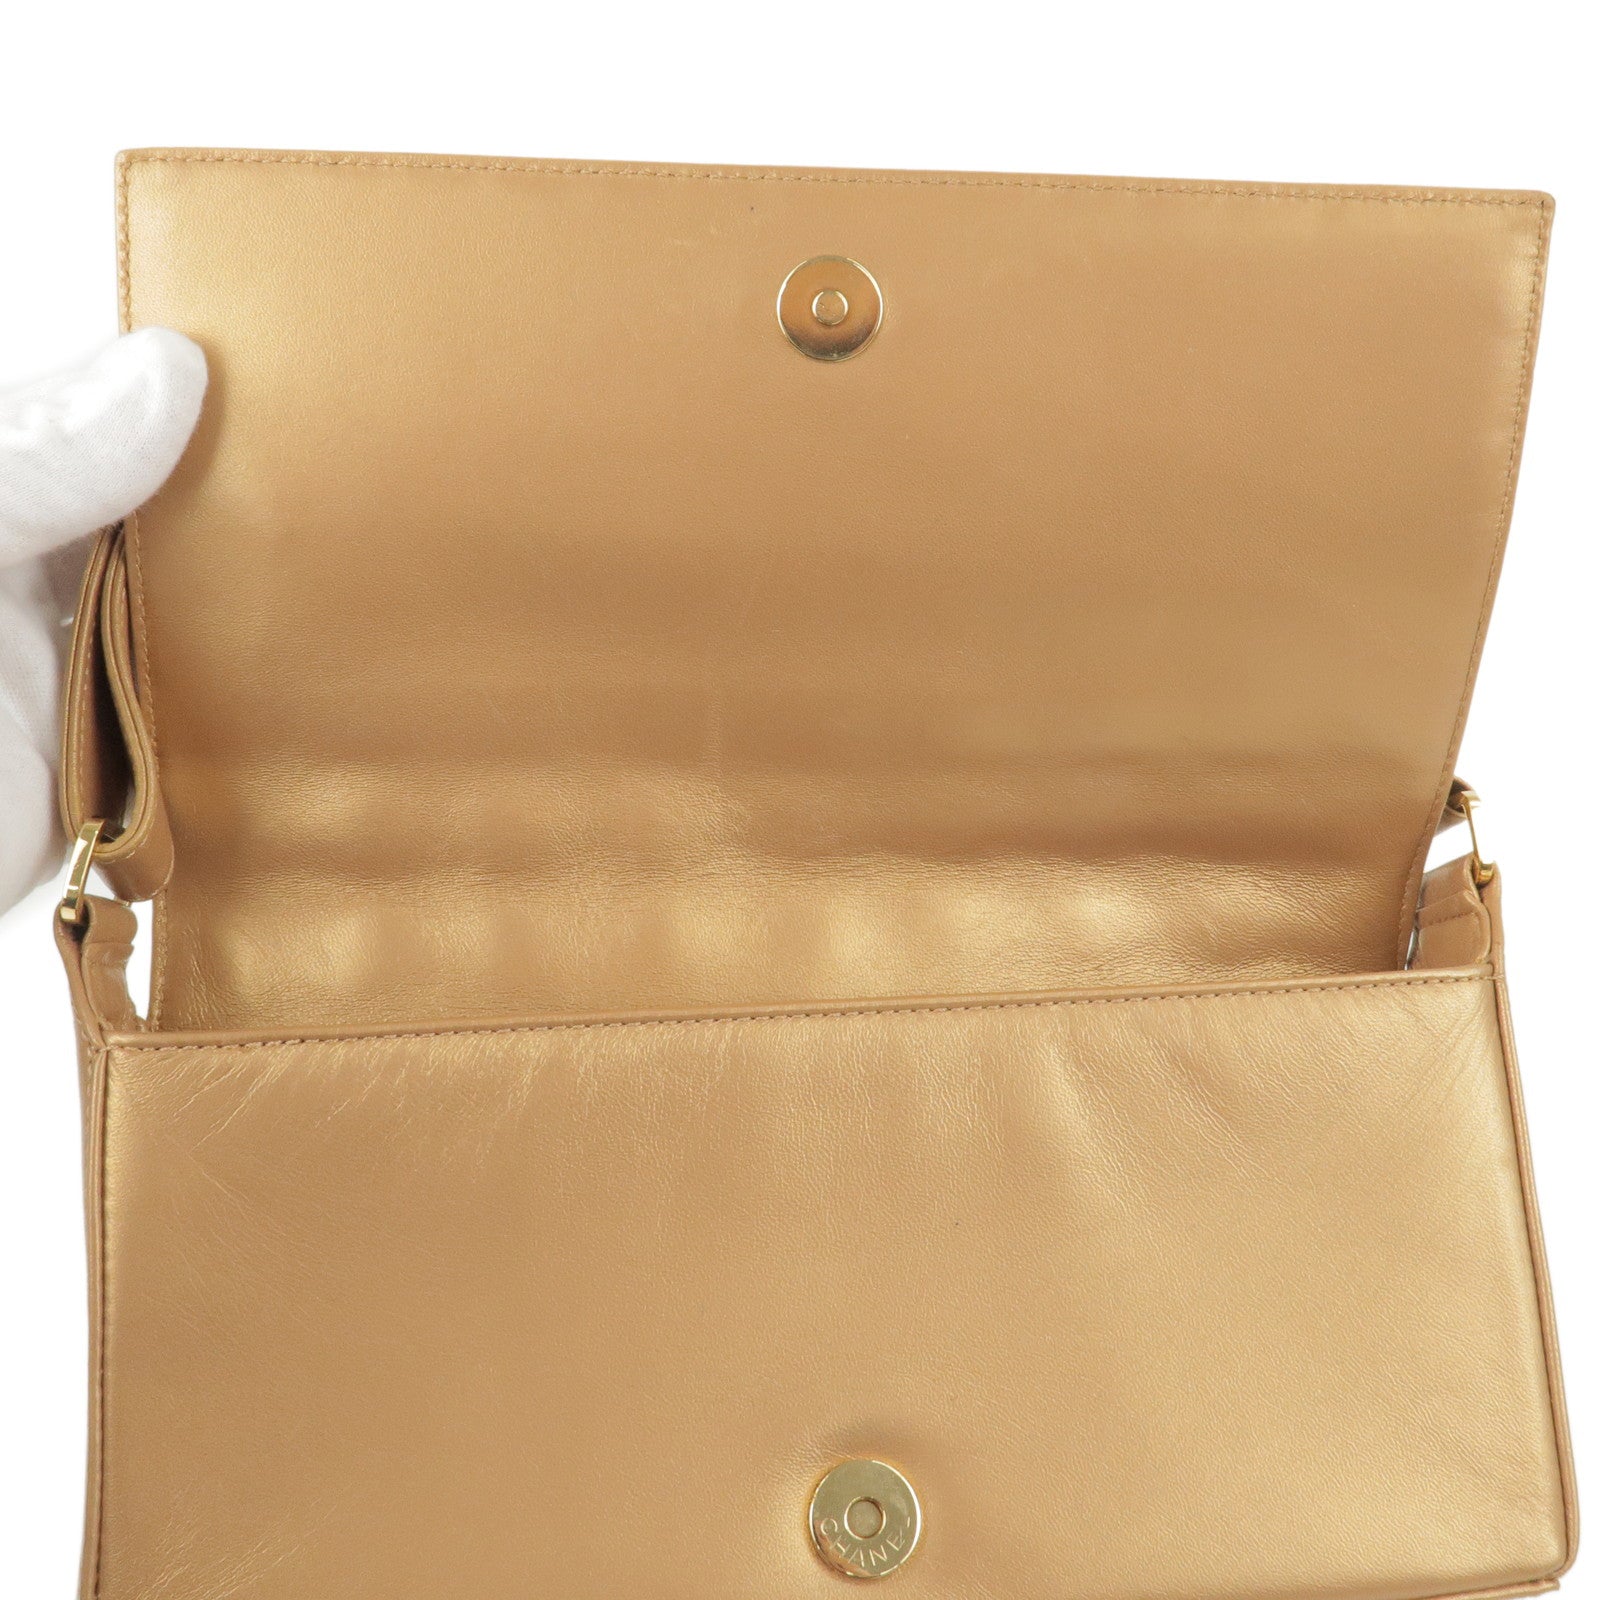 NWT Chanel 19 Large Lambskin Flap Shoulder Bag Rare Color Retails $7100